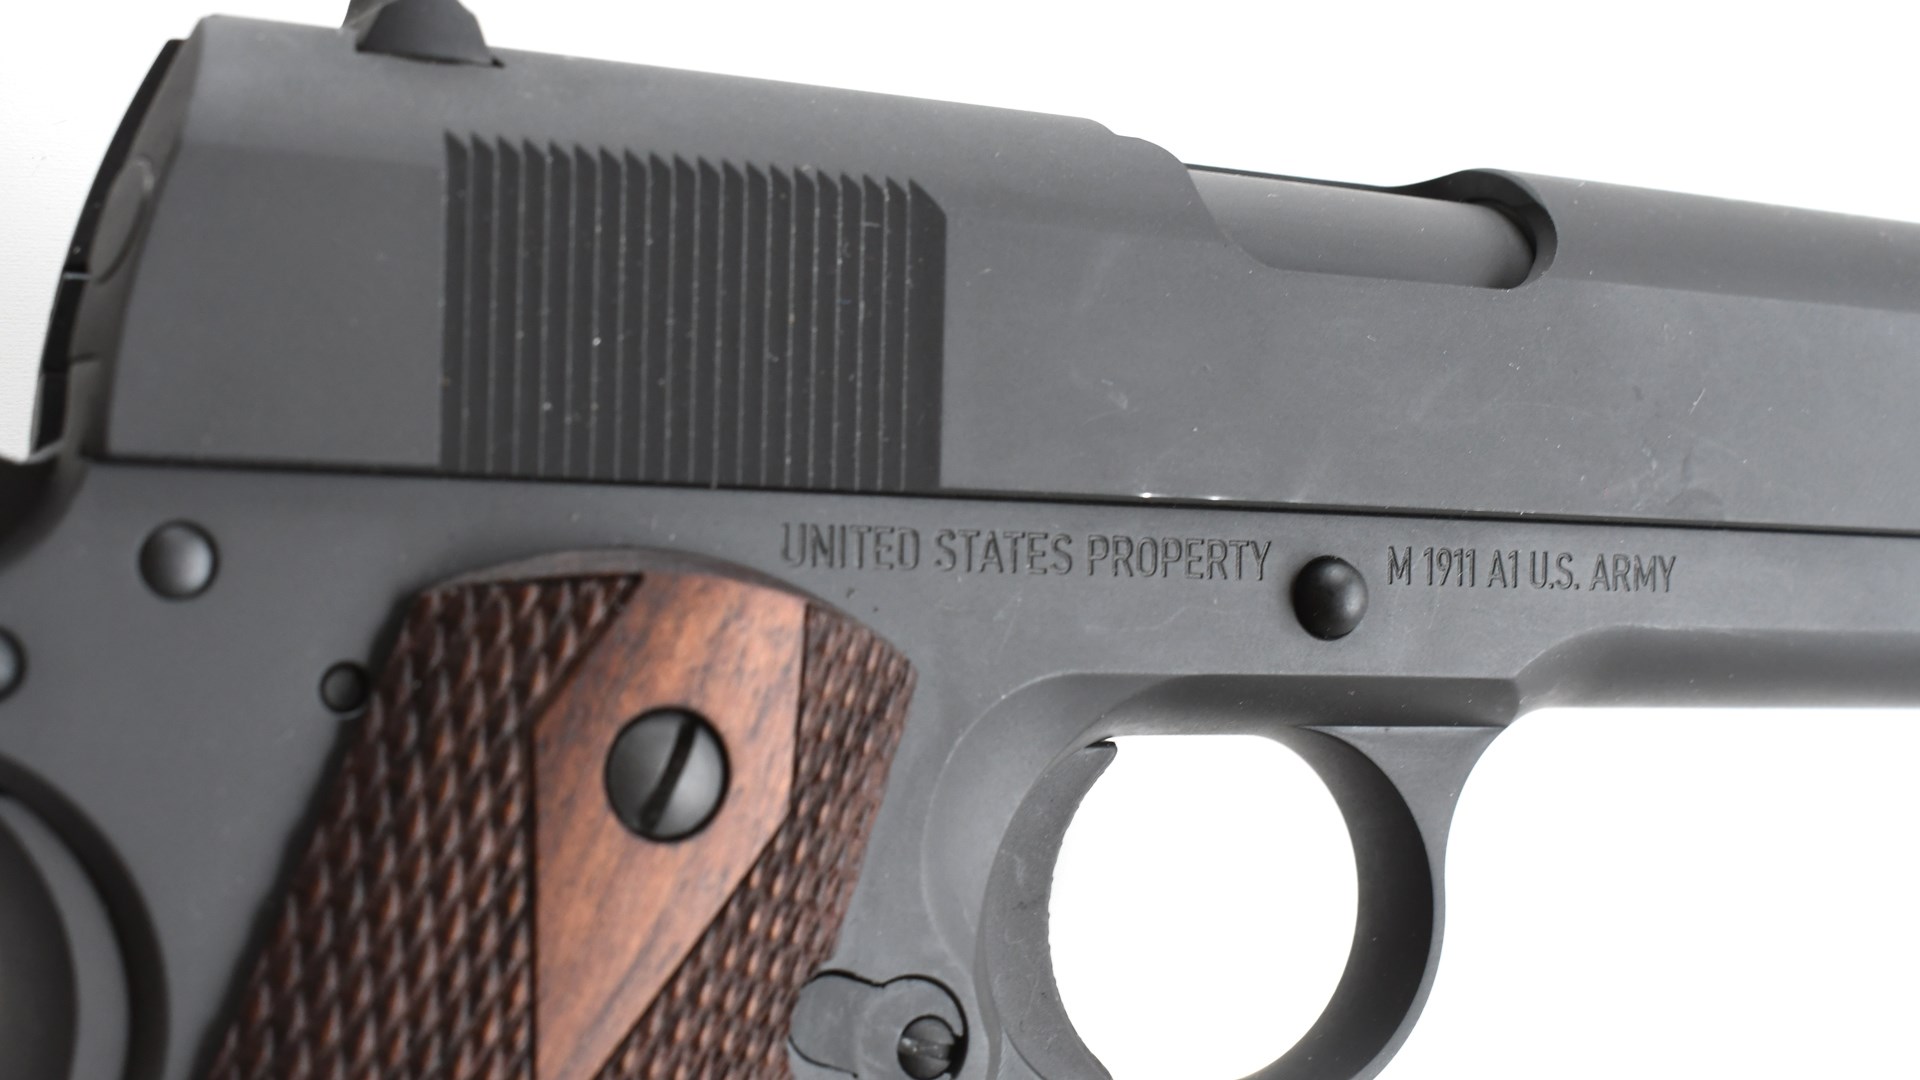 UNITED STATES PROPERTY M 1911 A1 U.S. ARMY rollmark stamp metal gun frame